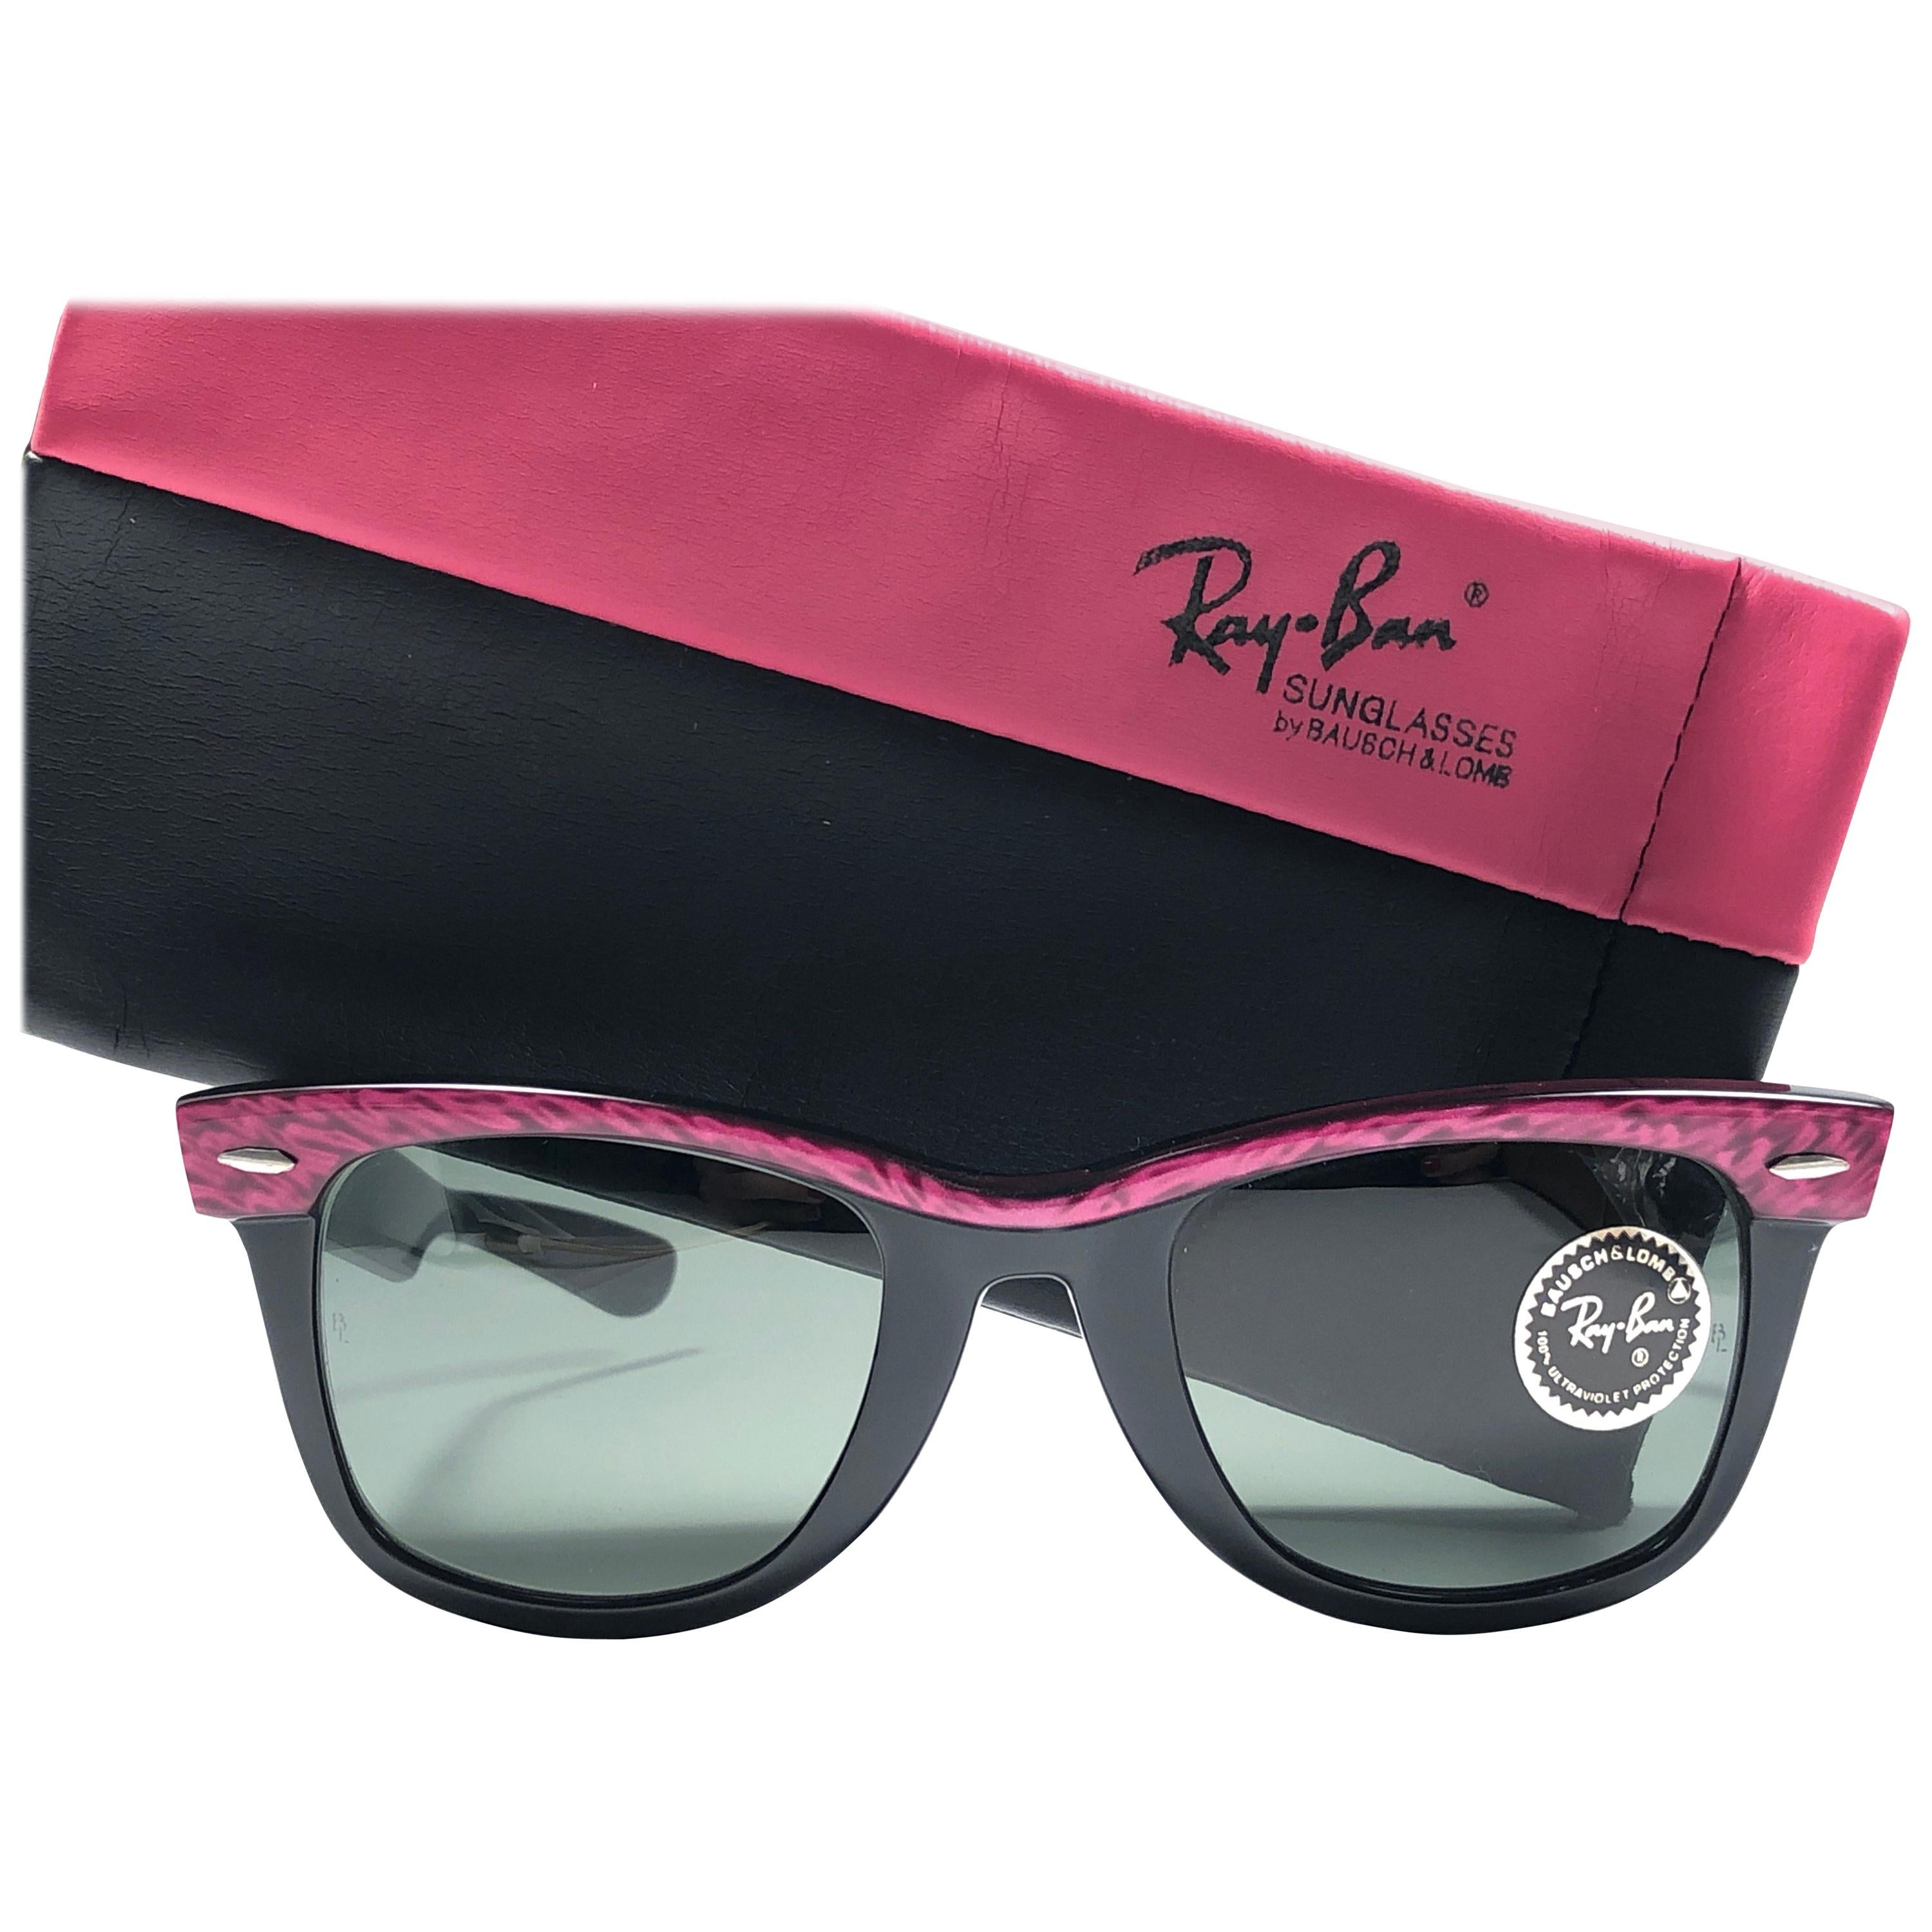 New Ray Ban The Wayfarer Fuchsia / Black B&L G15 Grey Lenses USA 80's Sunglasses